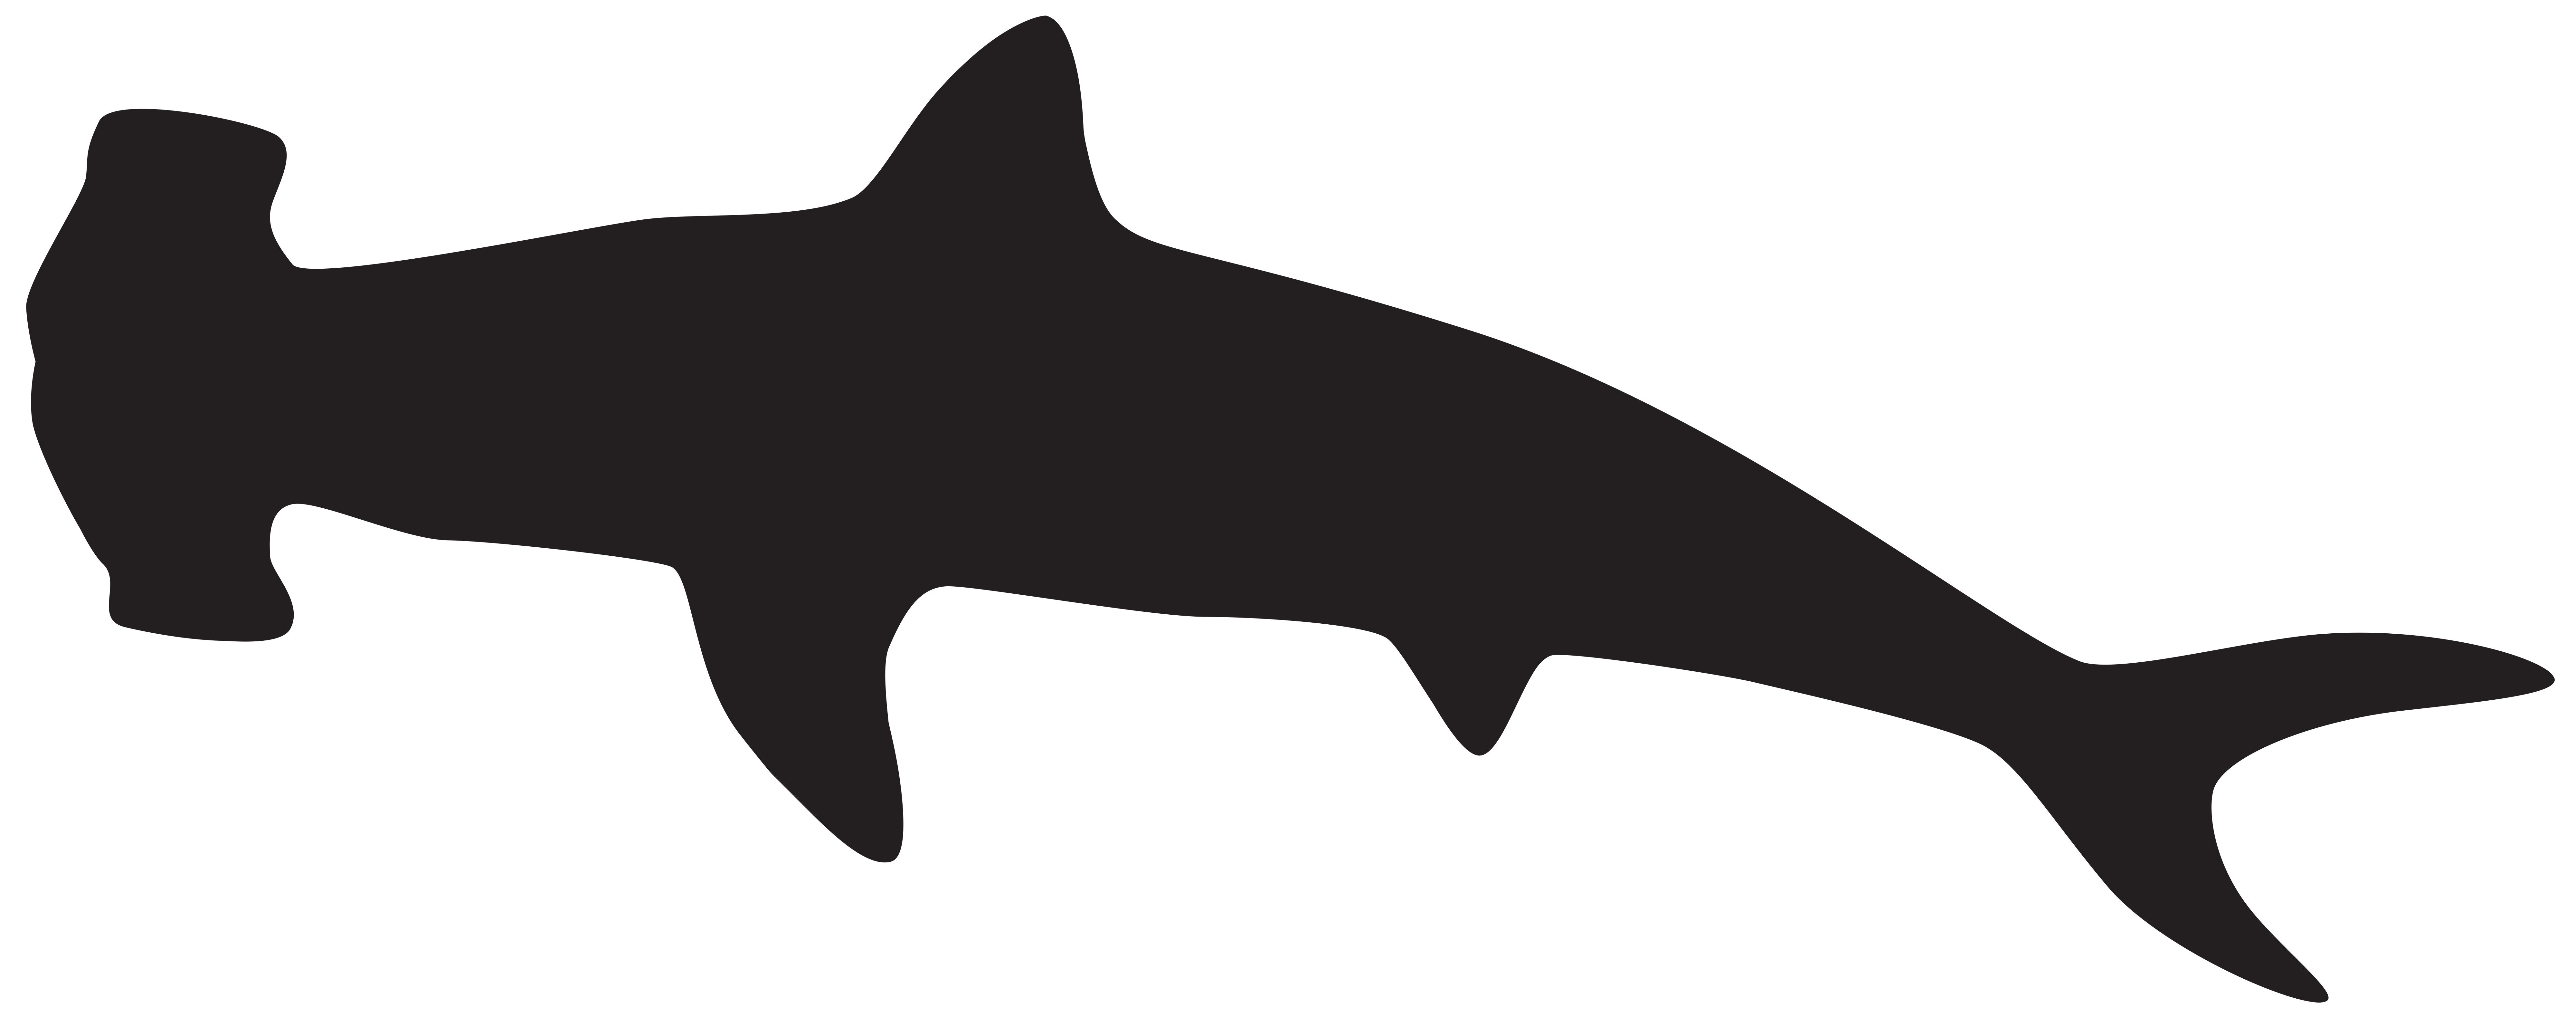 Shark Clipart Silhouette - ClipArt Best